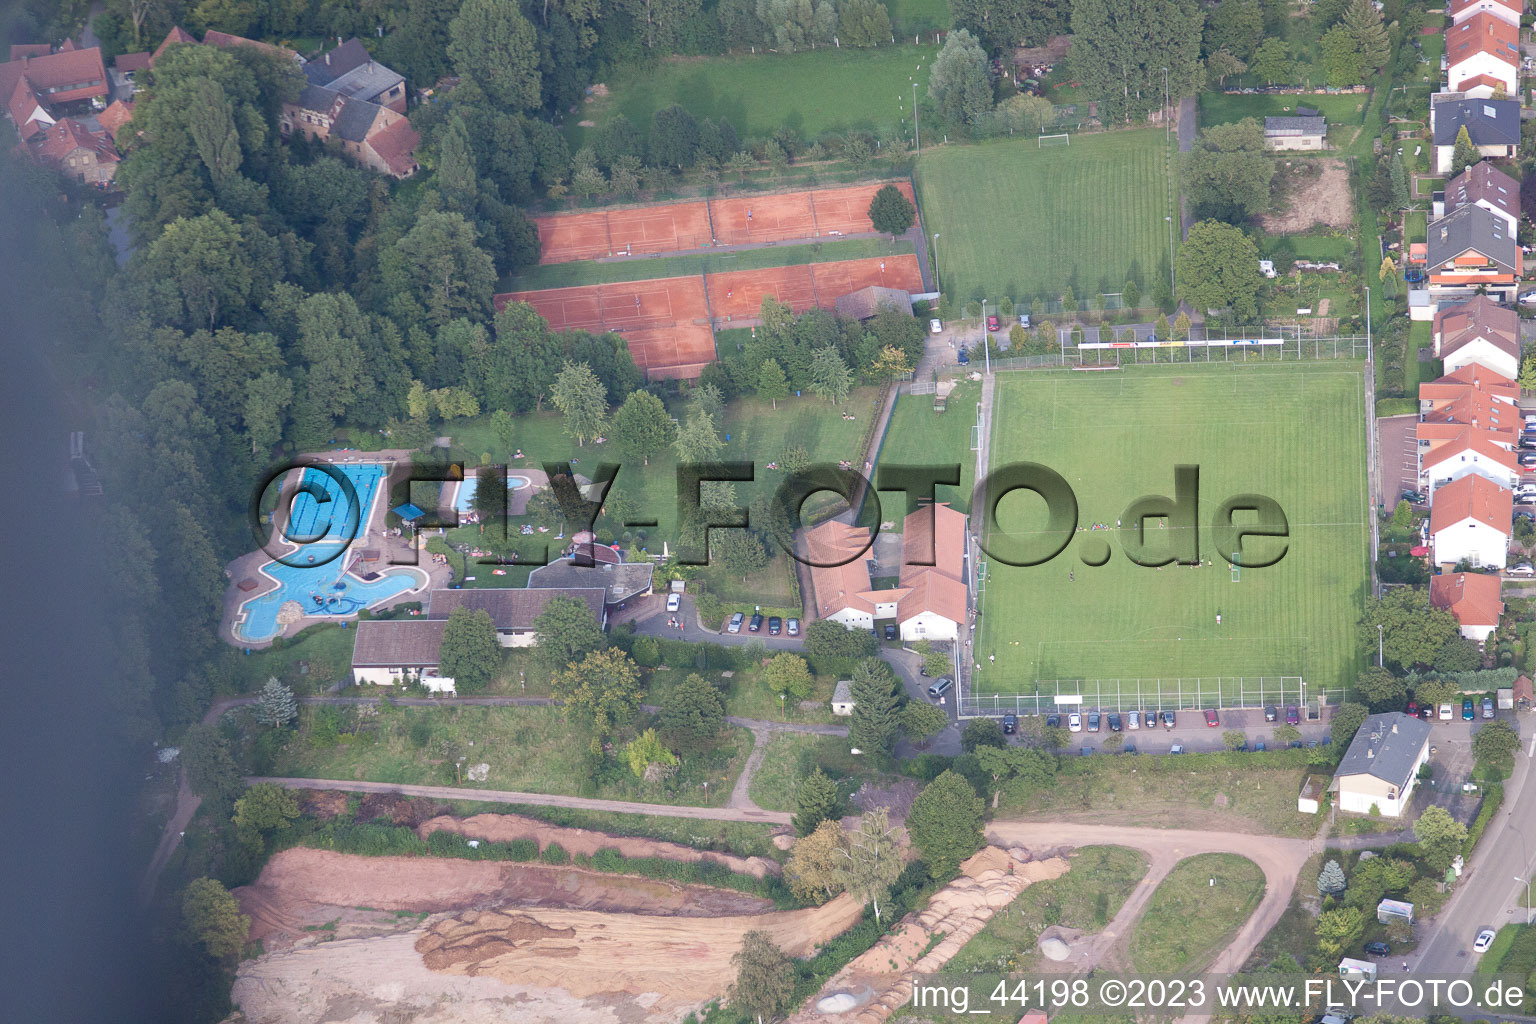 District Klingen in Heuchelheim-Klingen in the state Rhineland-Palatinate, Germany seen from a drone